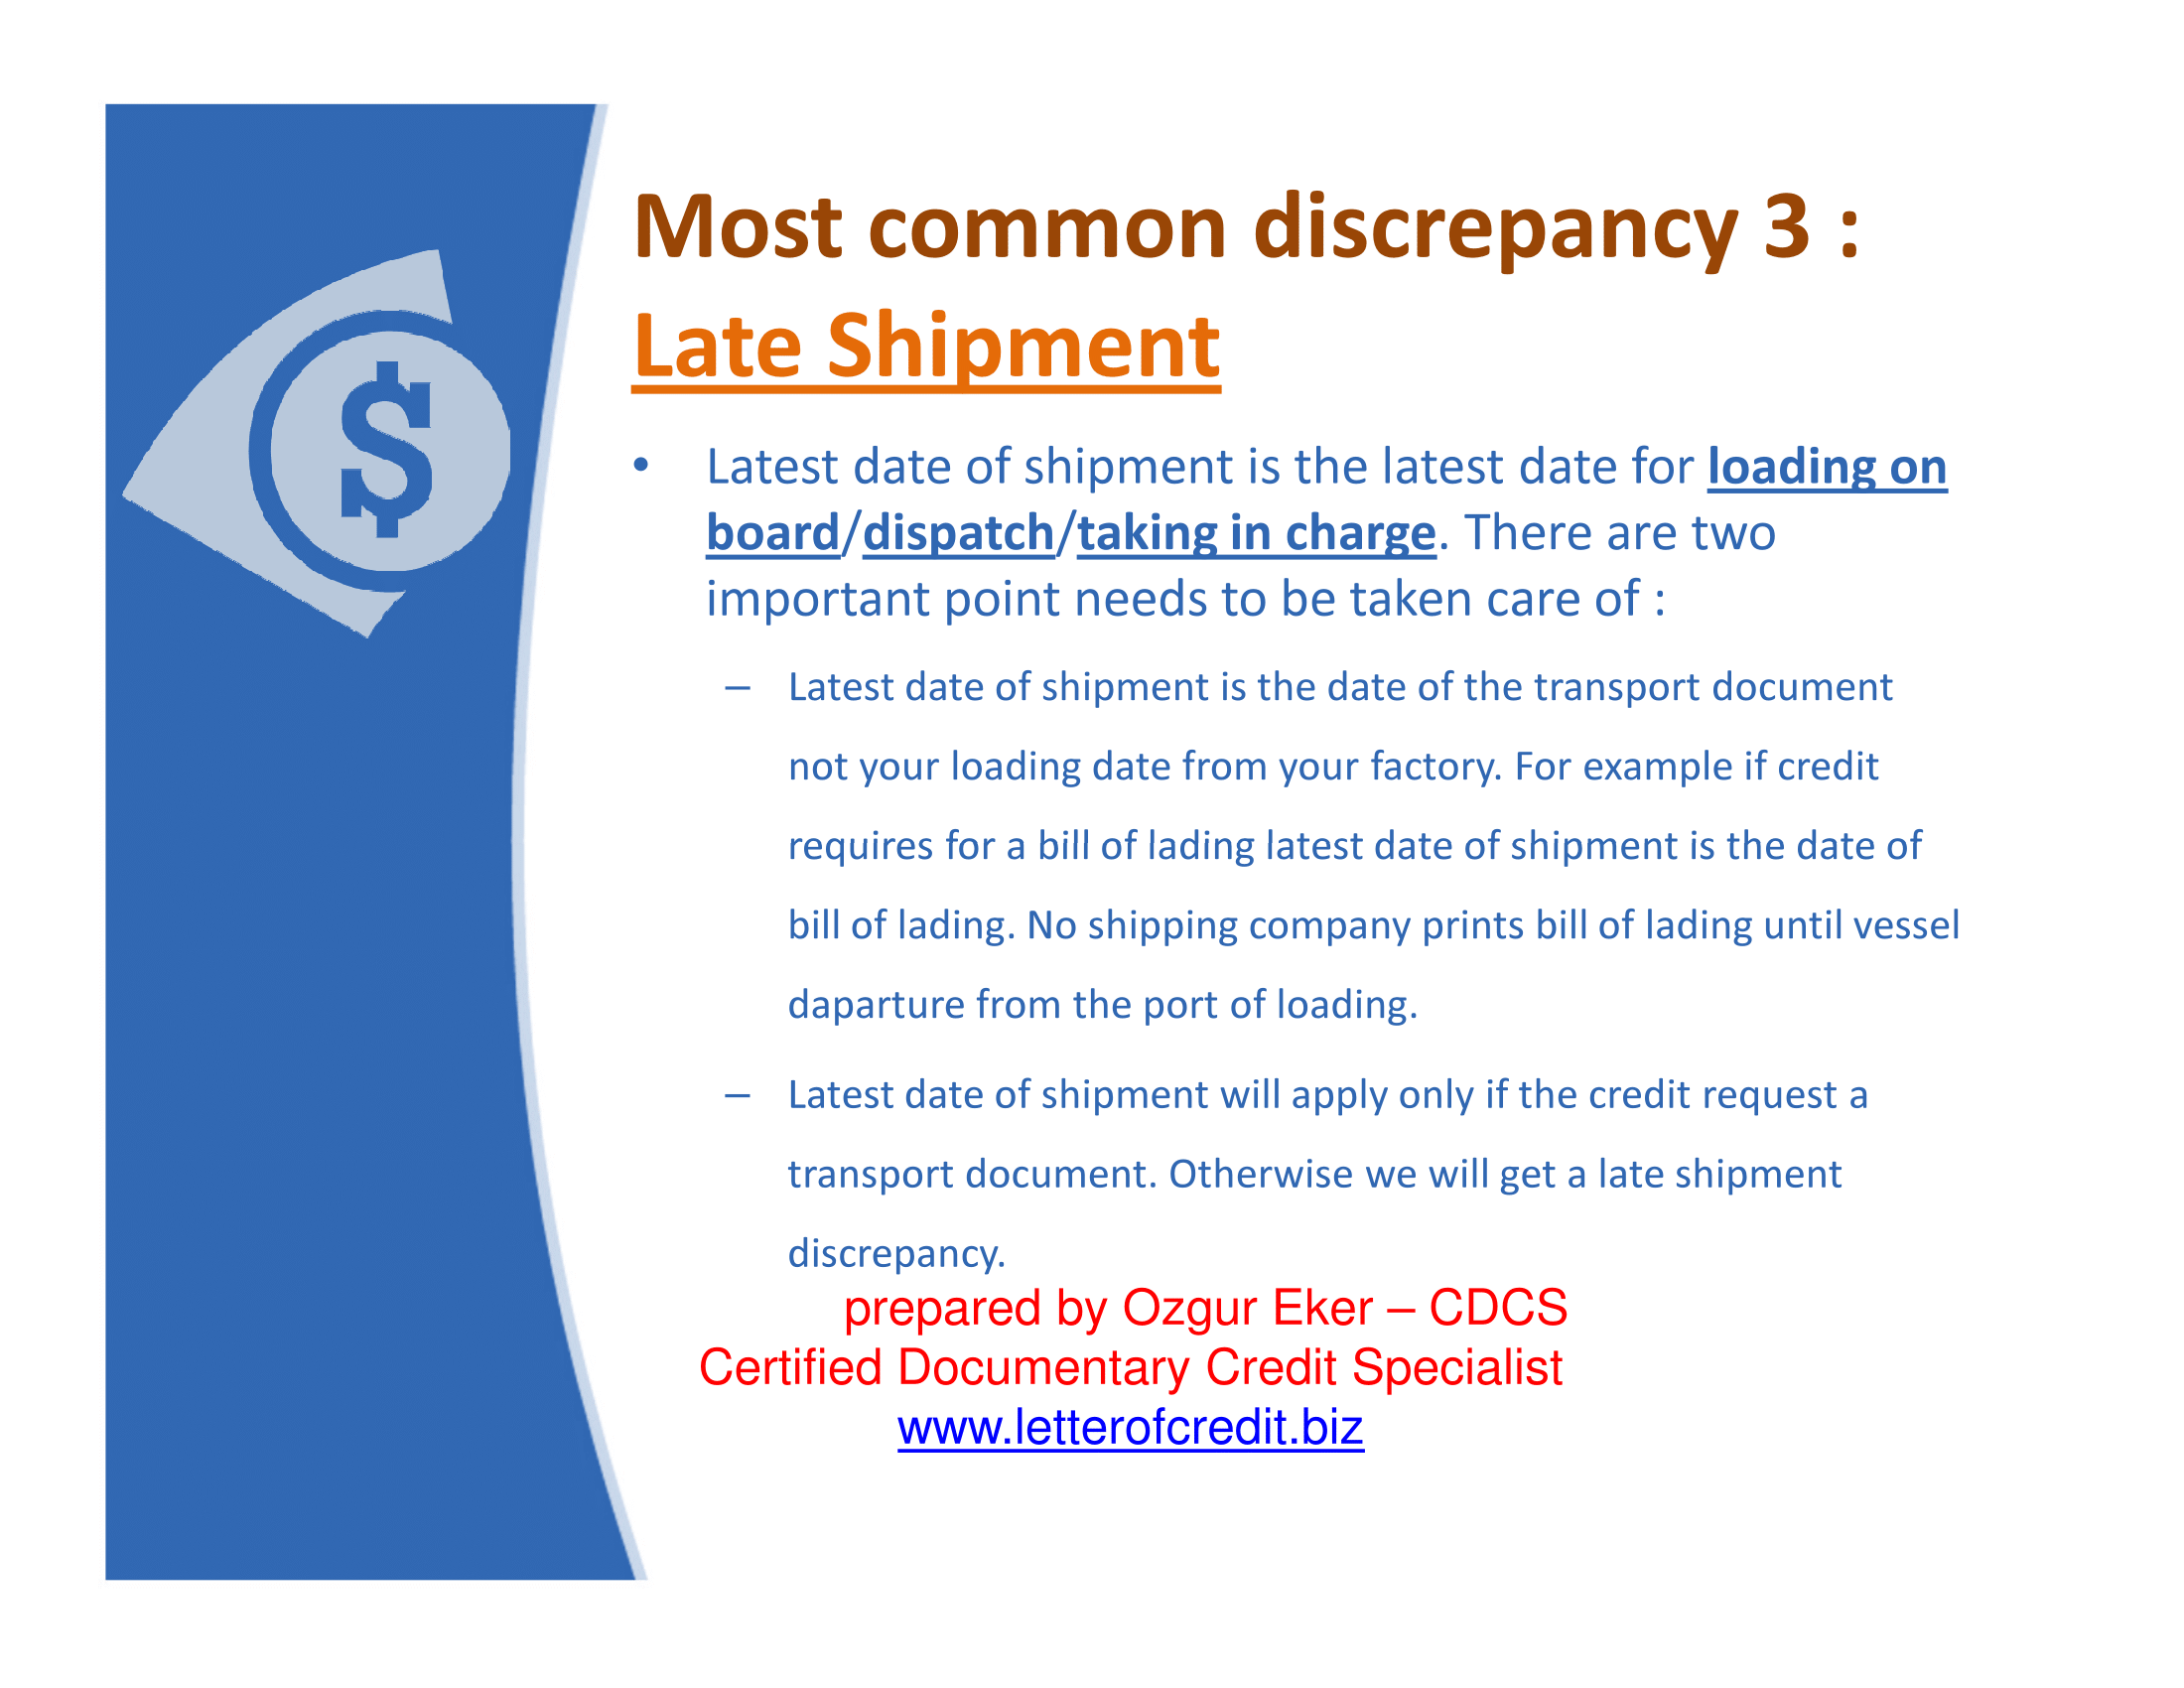 late shipment discrepancy